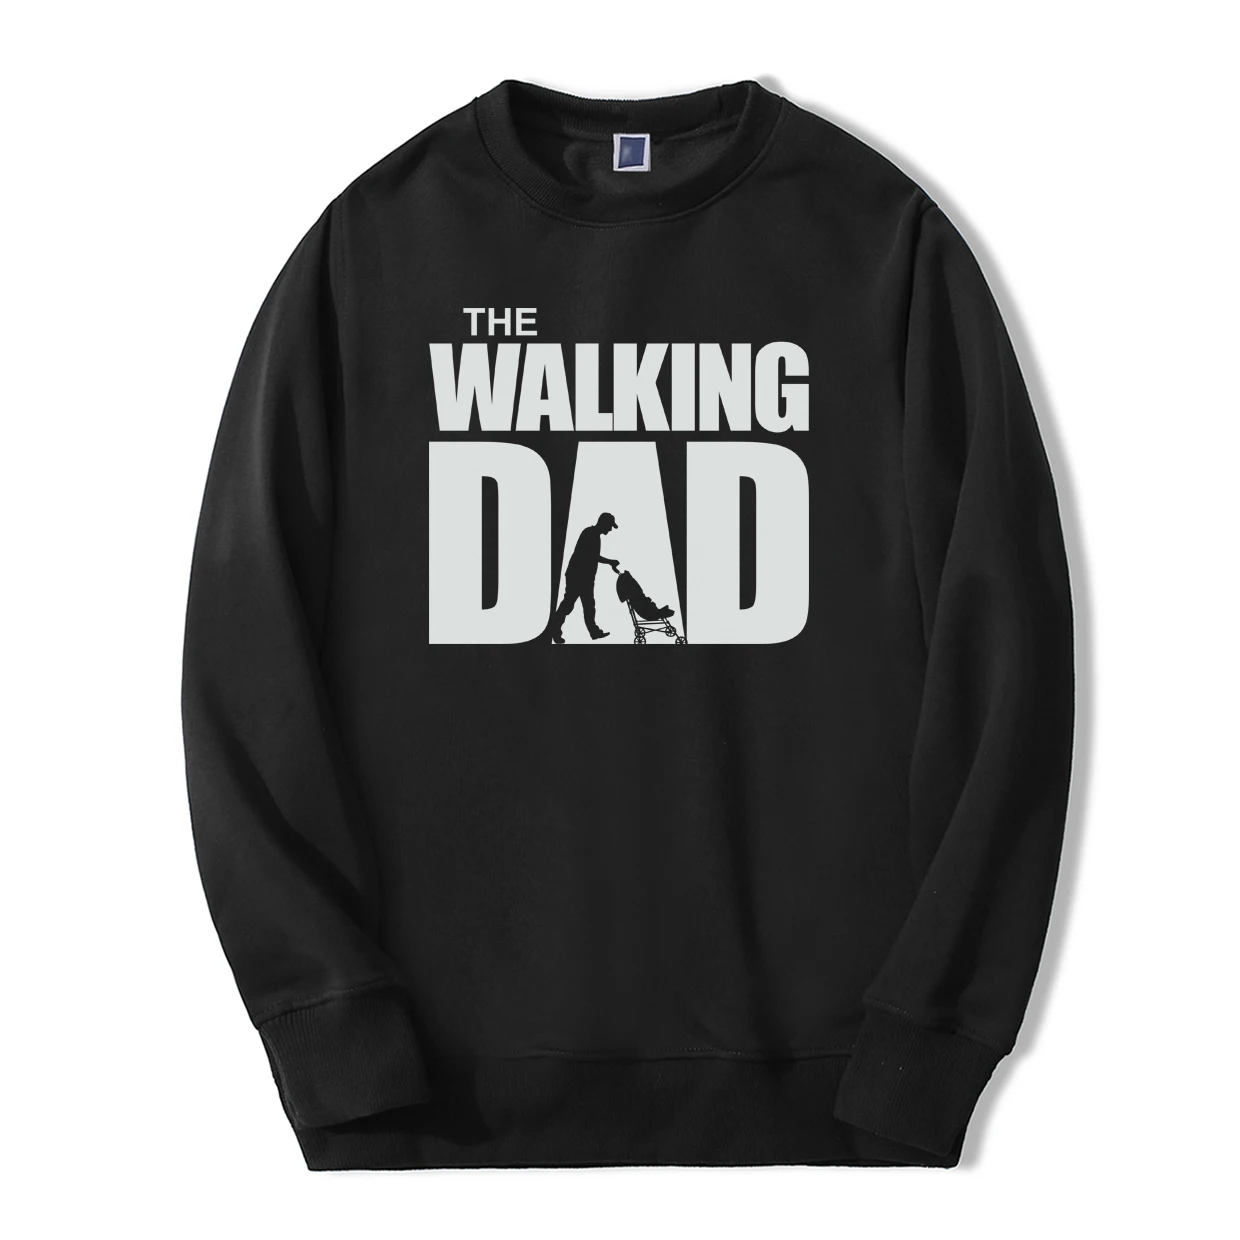 The Walking Dad Funny Print Sweatshirt TV Show 2019 Spring Winter Fashion Men Hoodies Hip Hop Style Fashion fitness Streetwear